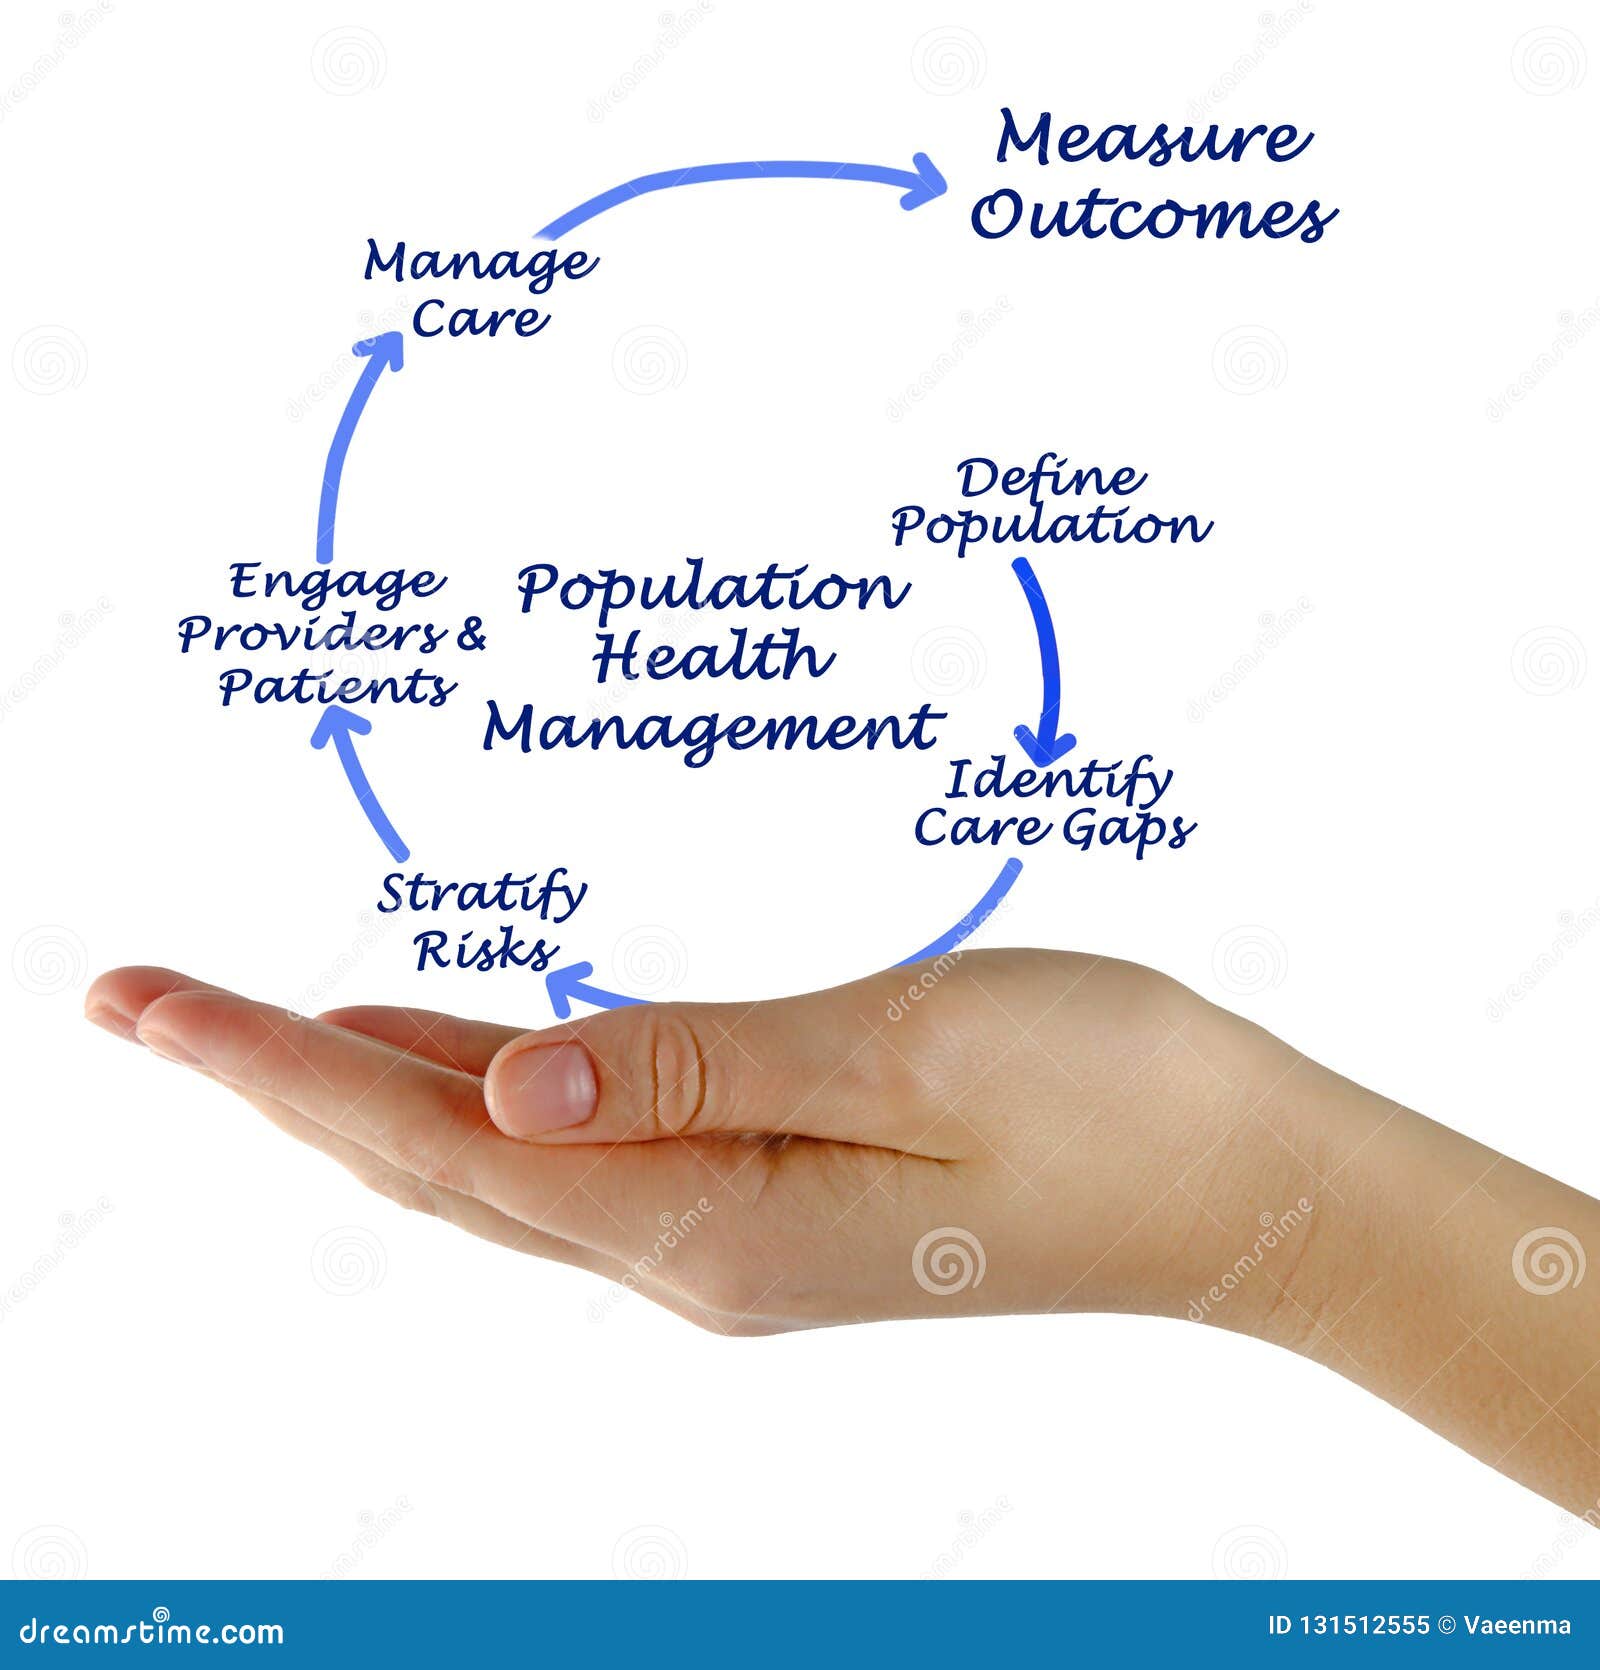 population health management